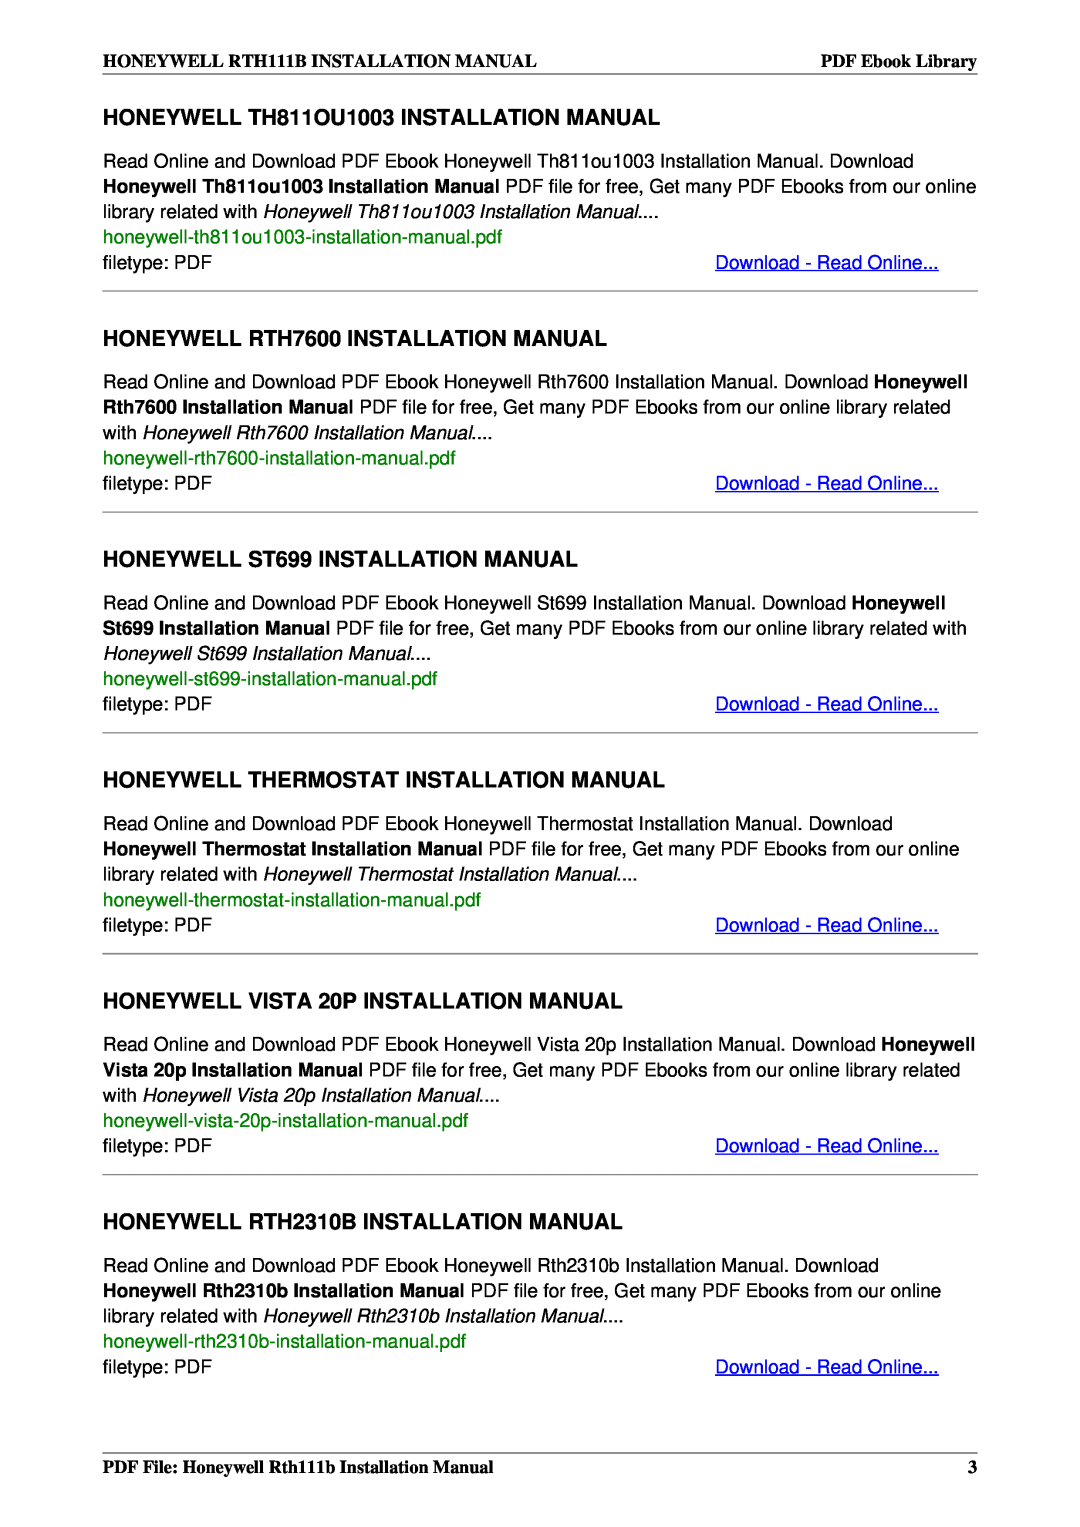 Honeywell RTH111B HONEYWELL TH811OU1003 INSTALLATION MANUAL, HONEYWELL RTH7600 INSTALLATION MANUAL, filetype PDF 